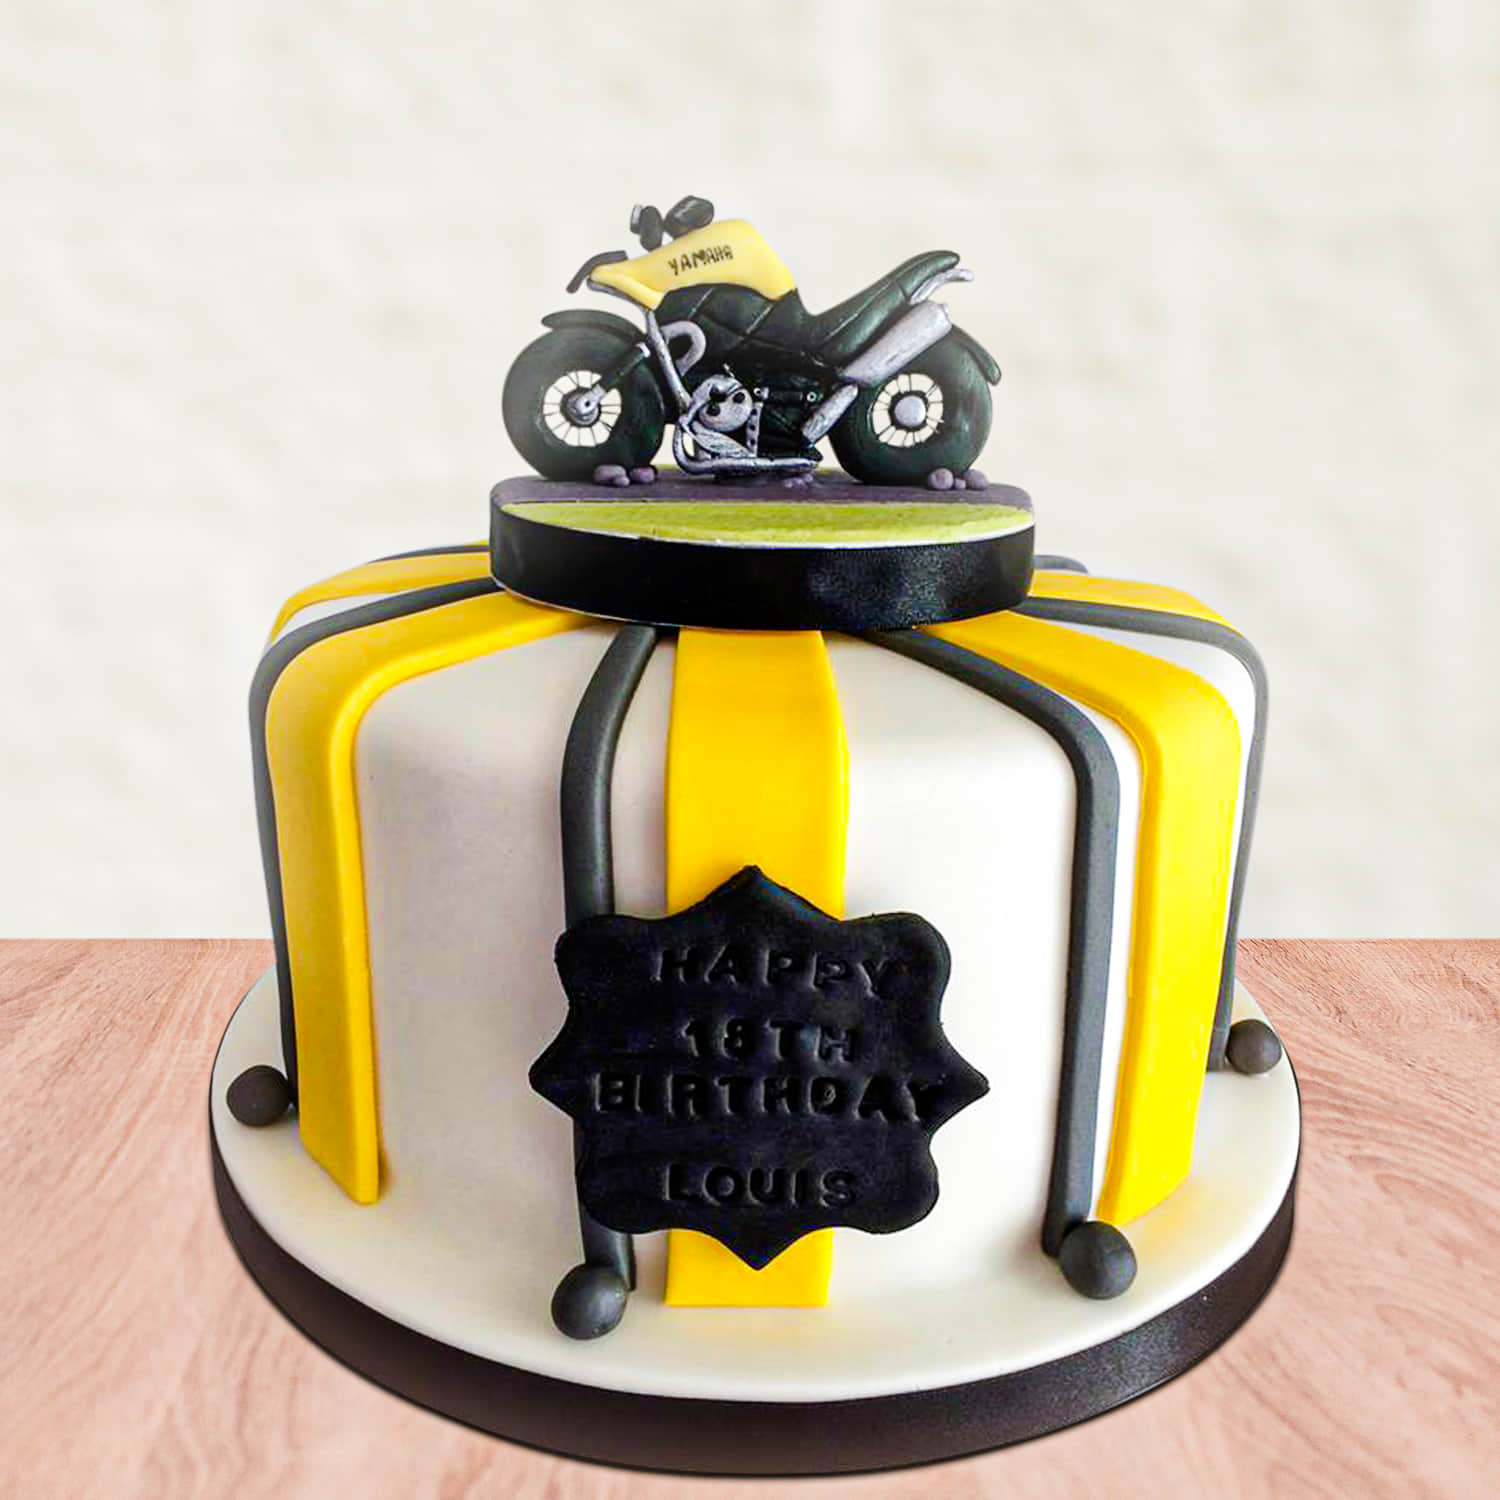 Bike cake | Bike cakes, Novelty cakes, Cupcake cakes